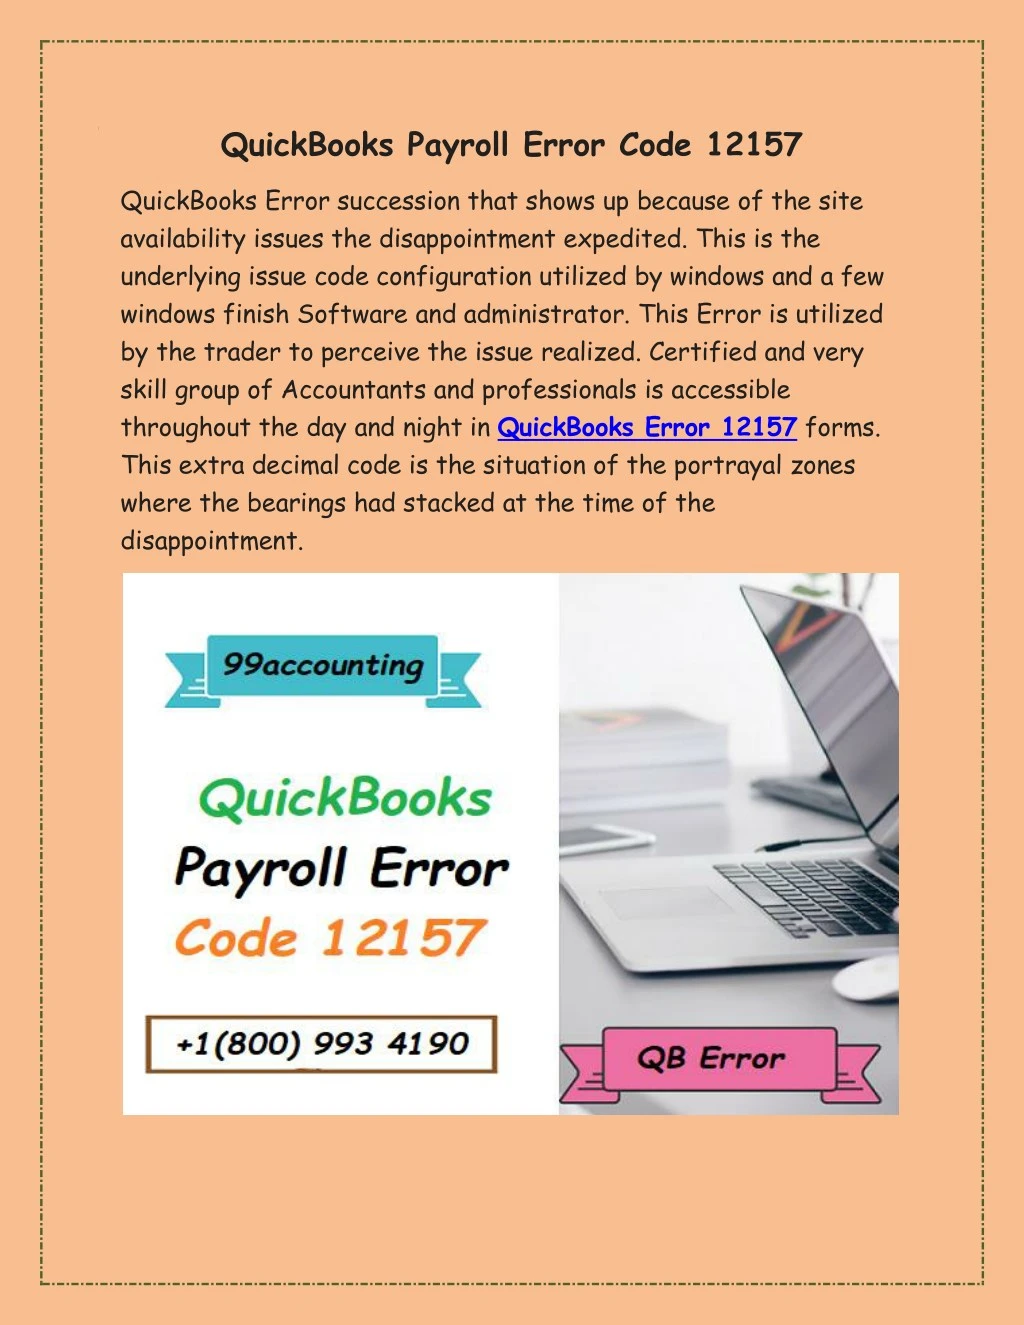 quickbooks payroll error code 12157